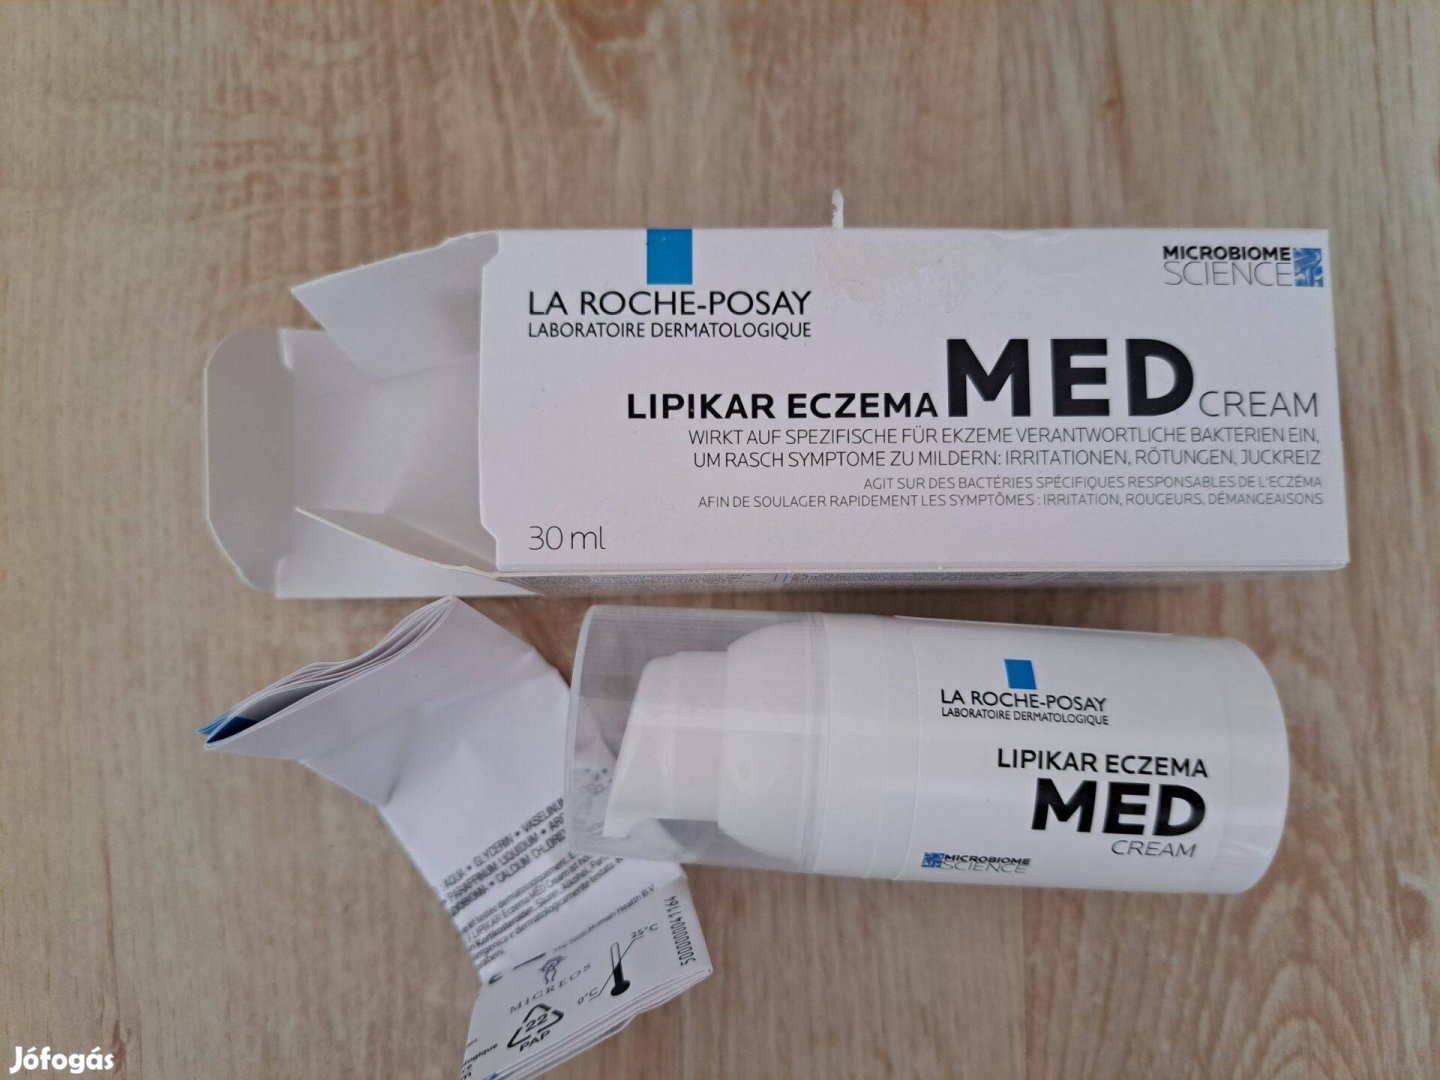 La Roche-Posay Lipikar Eczema MED krém, 30ml